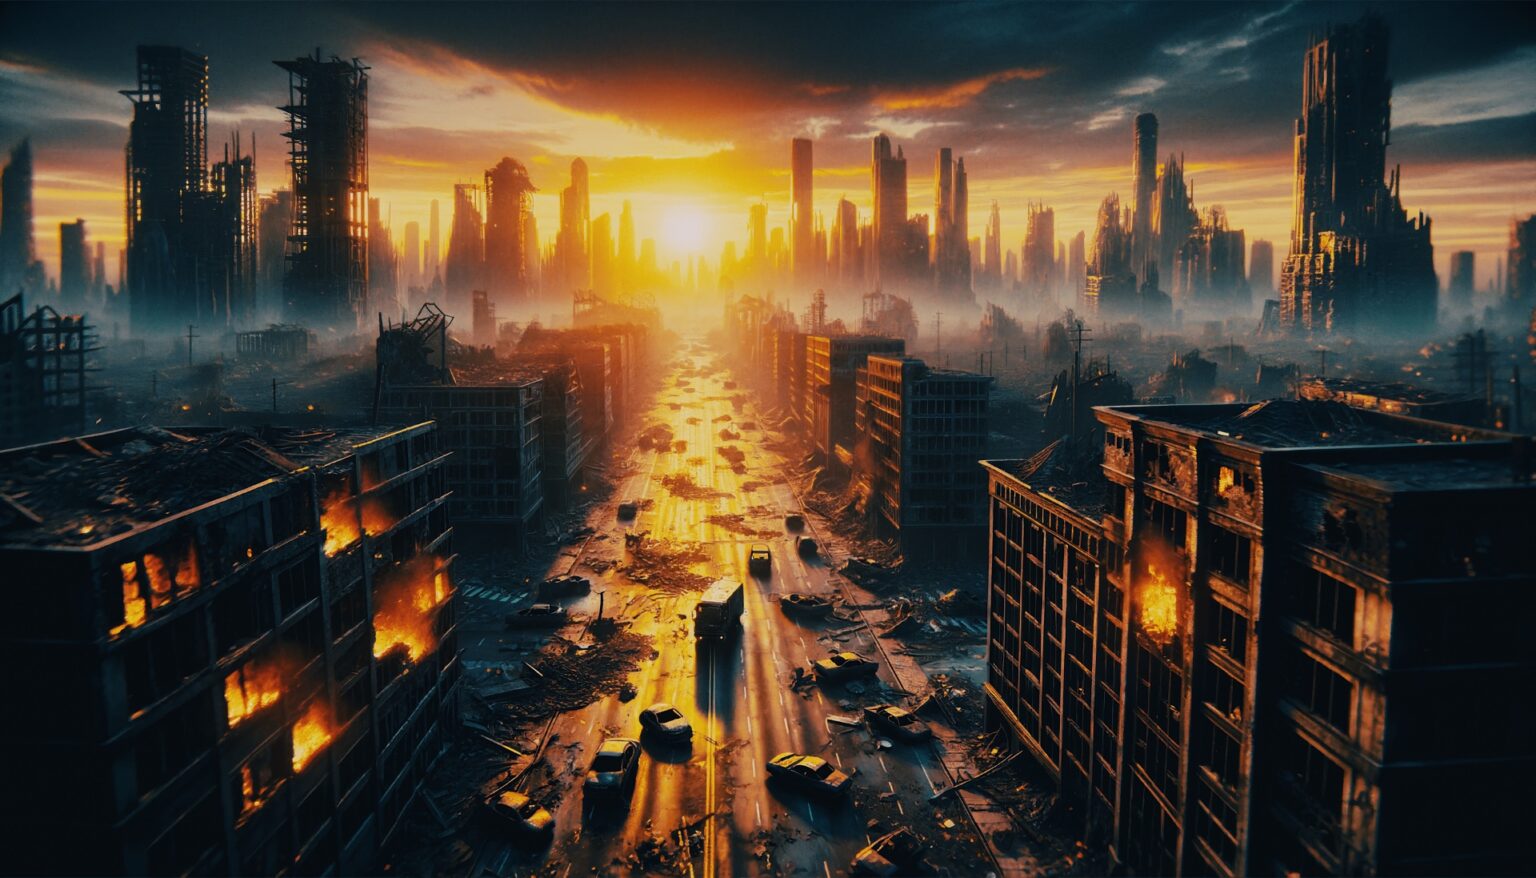 Dystopian city